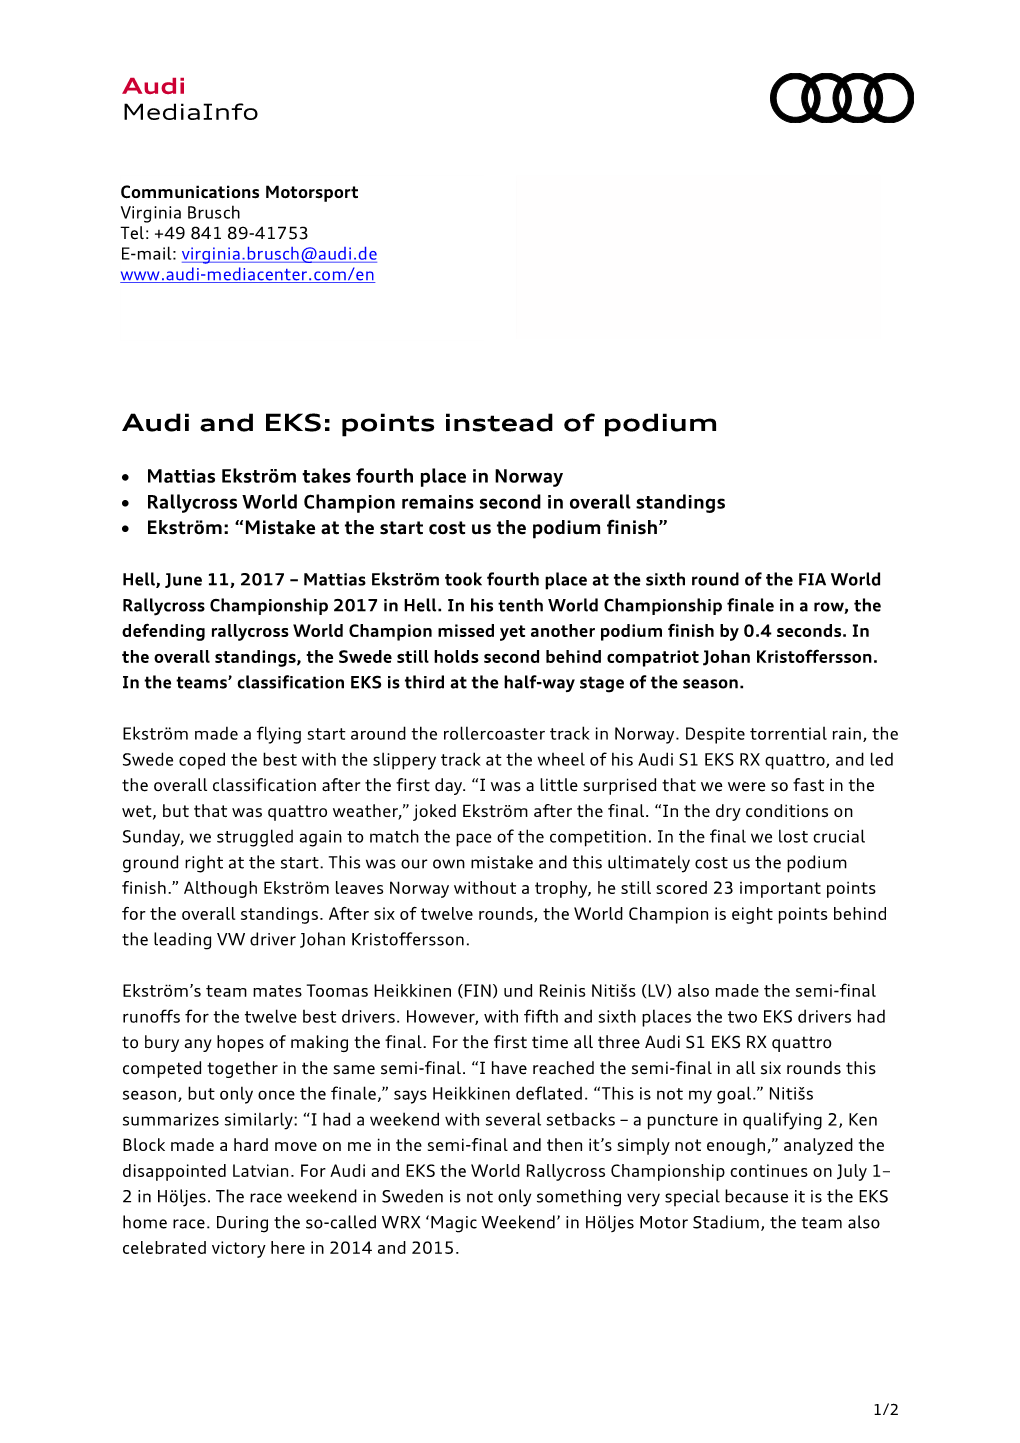 Audi and EKS: Points Instead of Podium